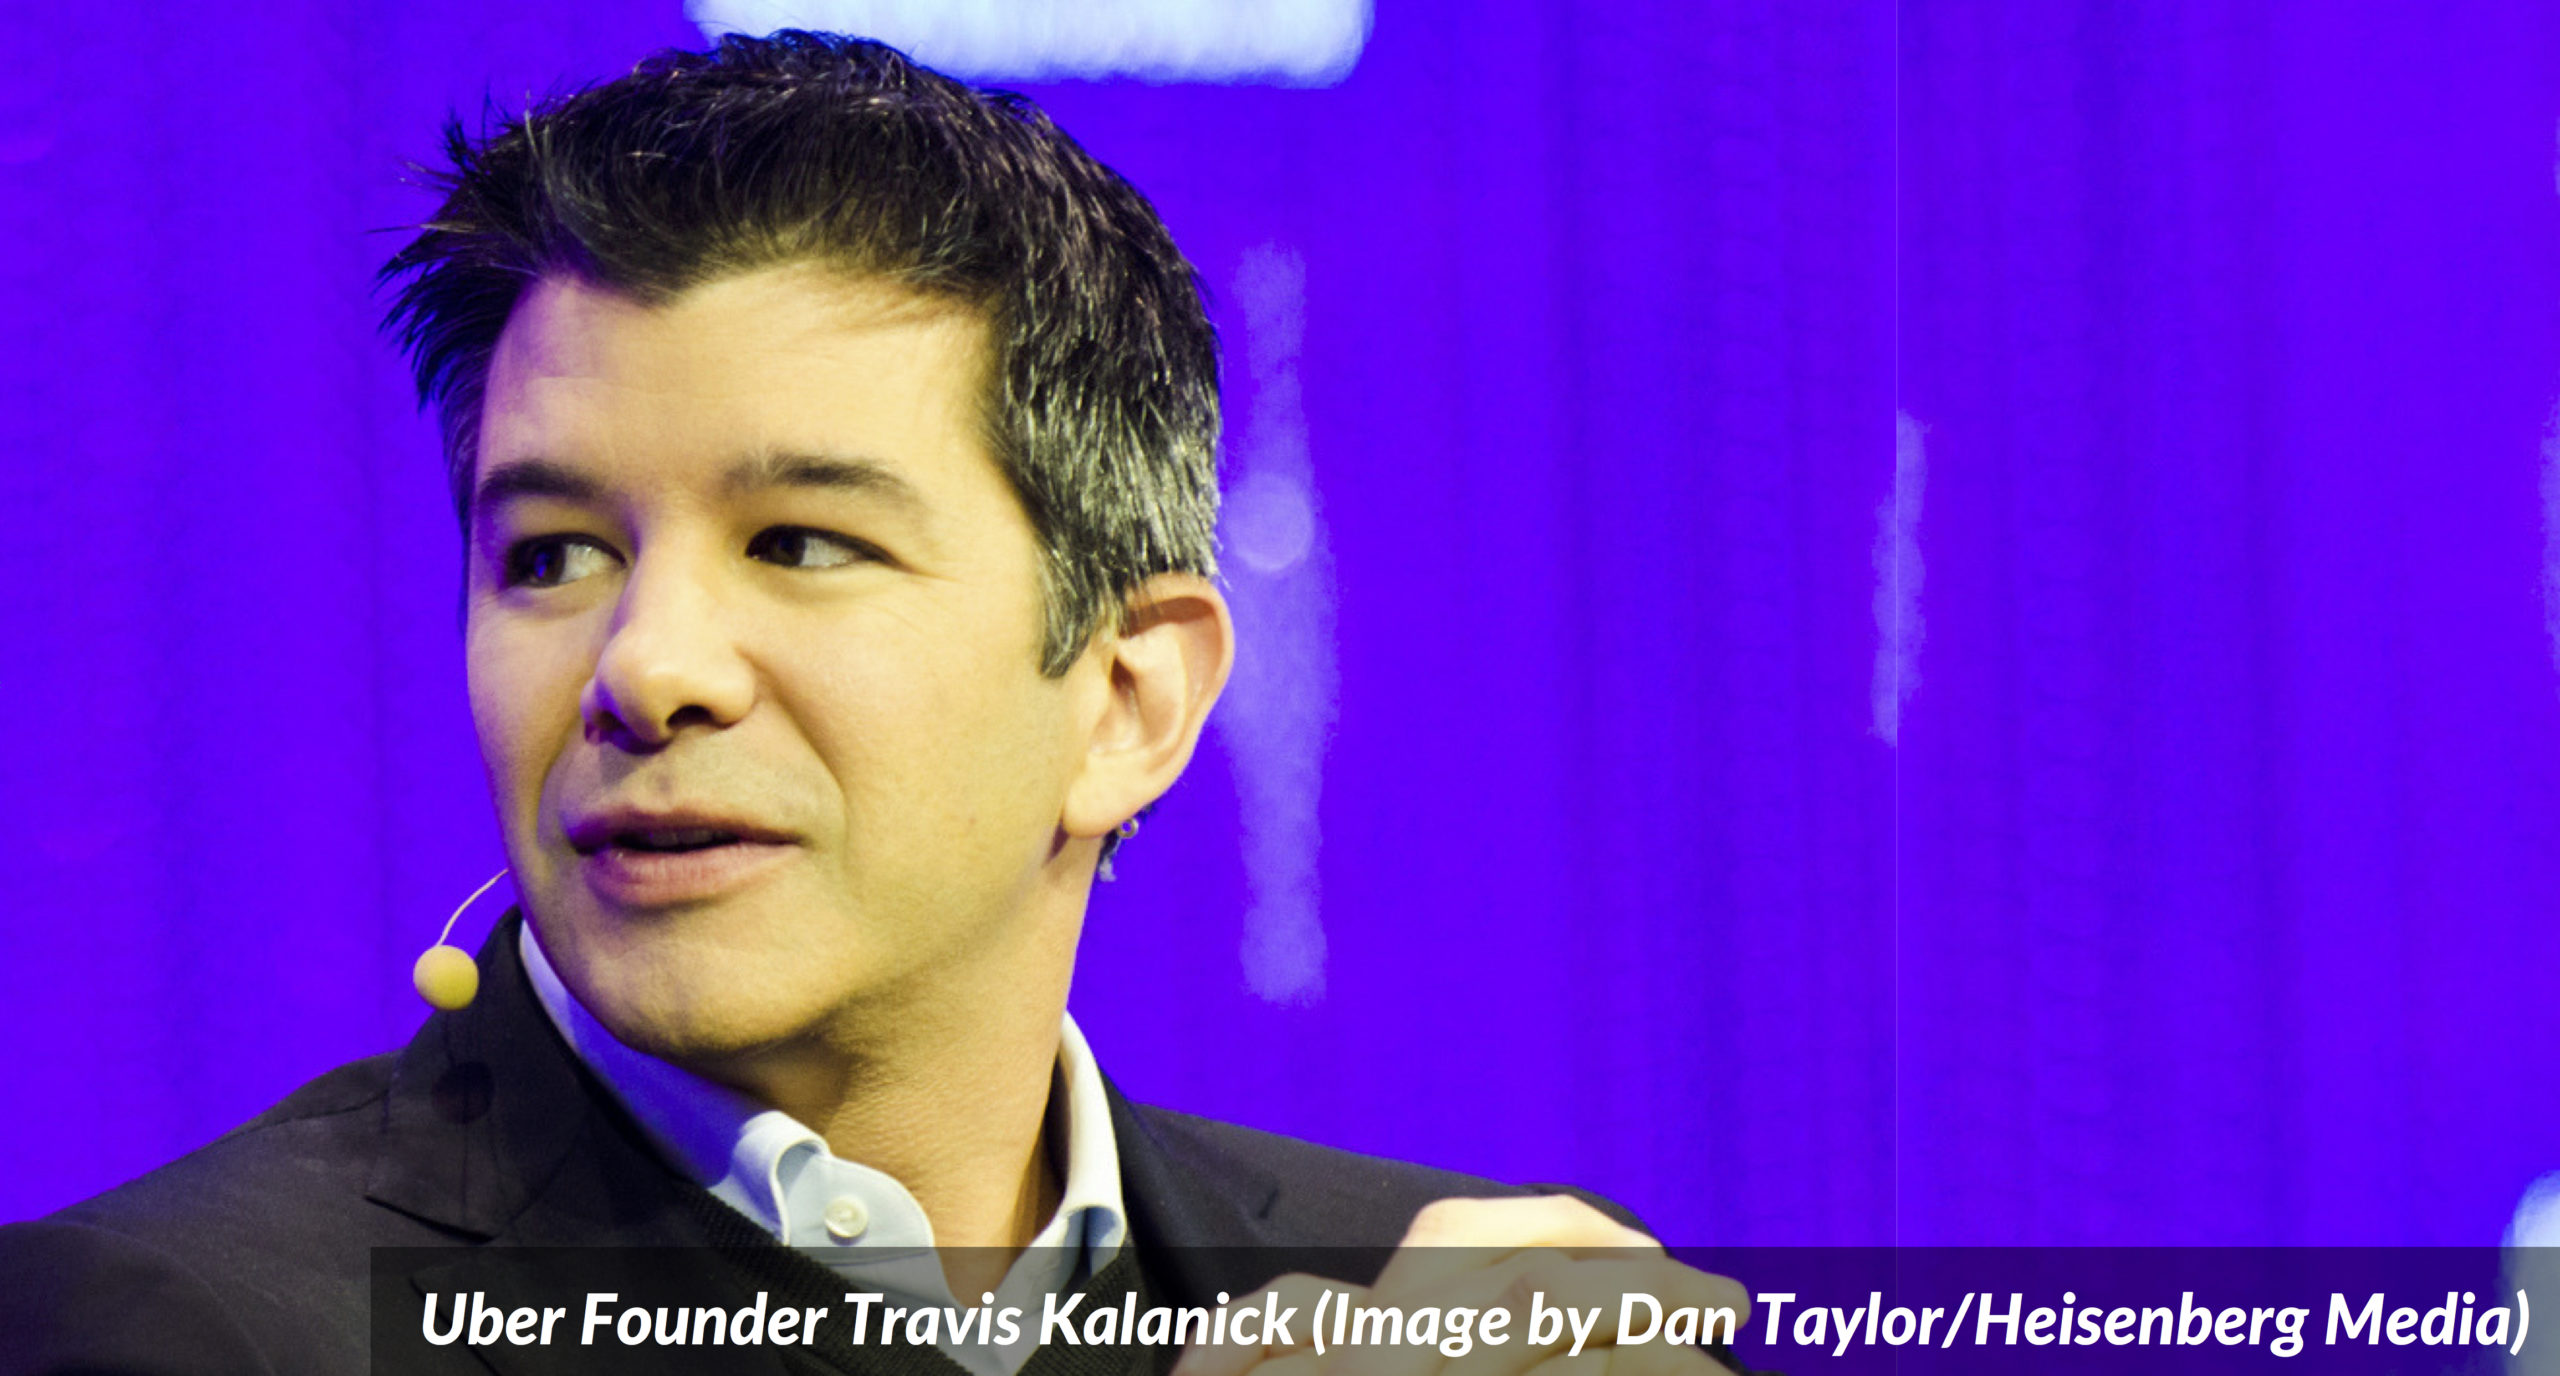 Uber Founder Travis Kalanick